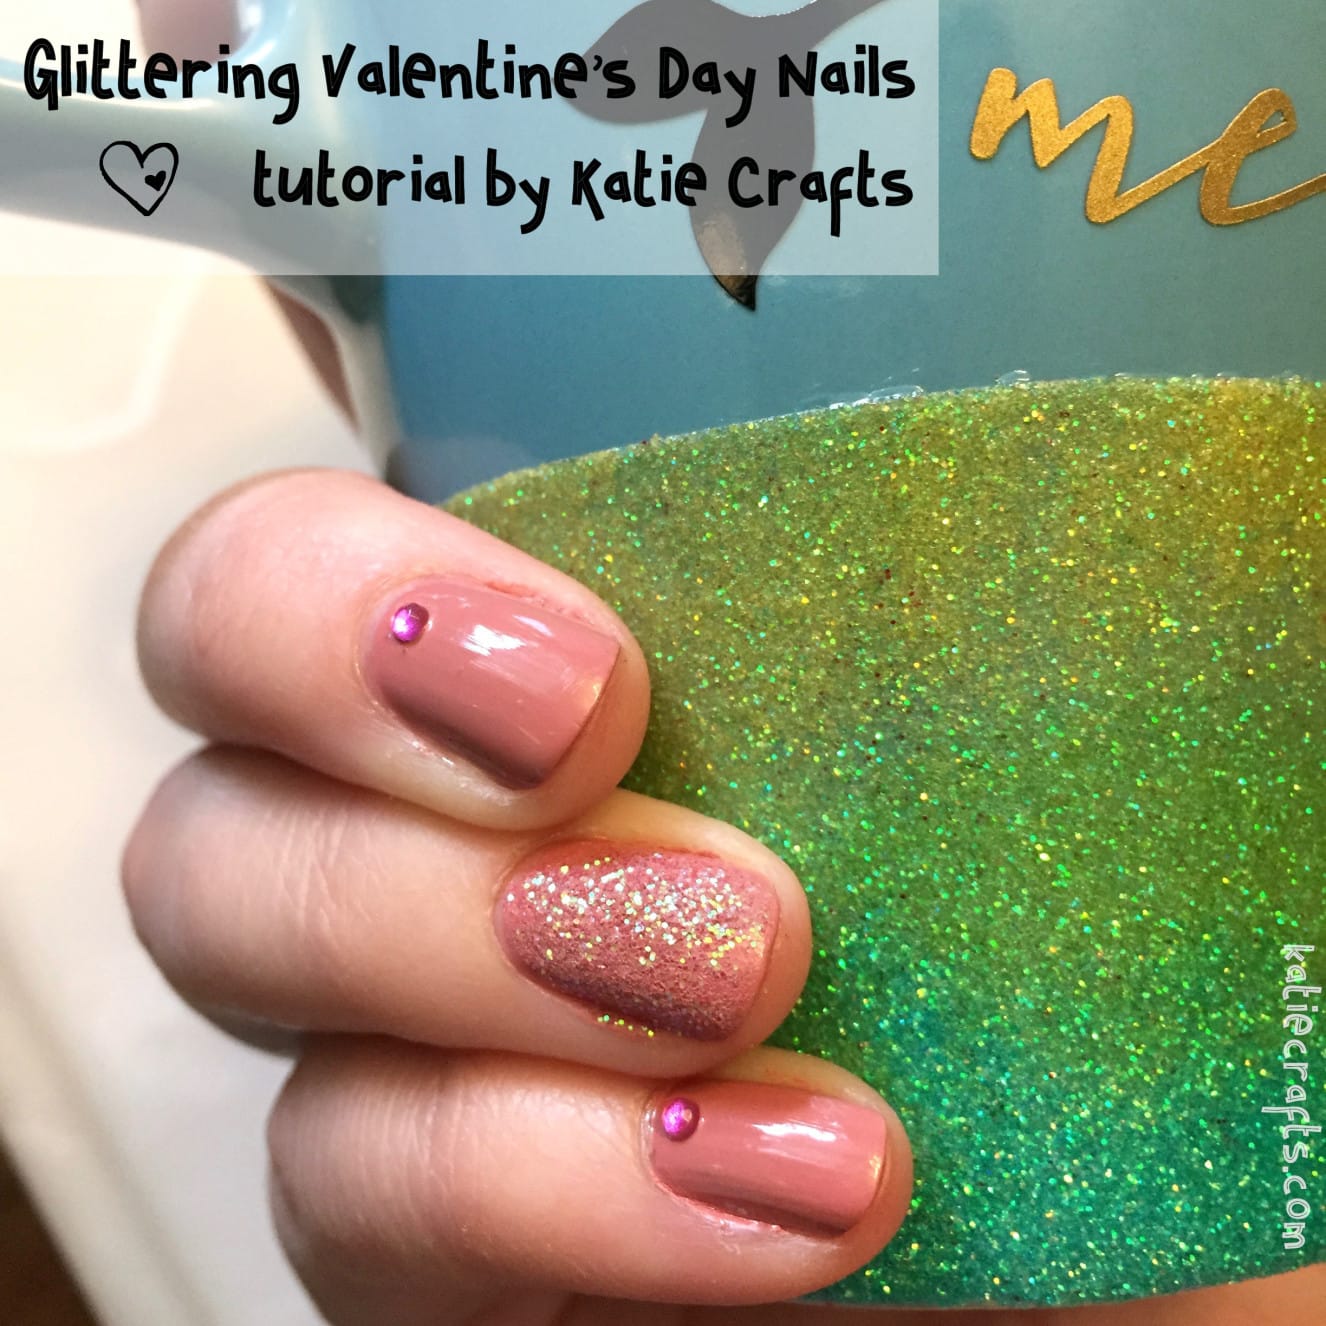 Glittering Valentine's Day Nails, tutorial from Katie Crafts; https://www.katiecrafts.com